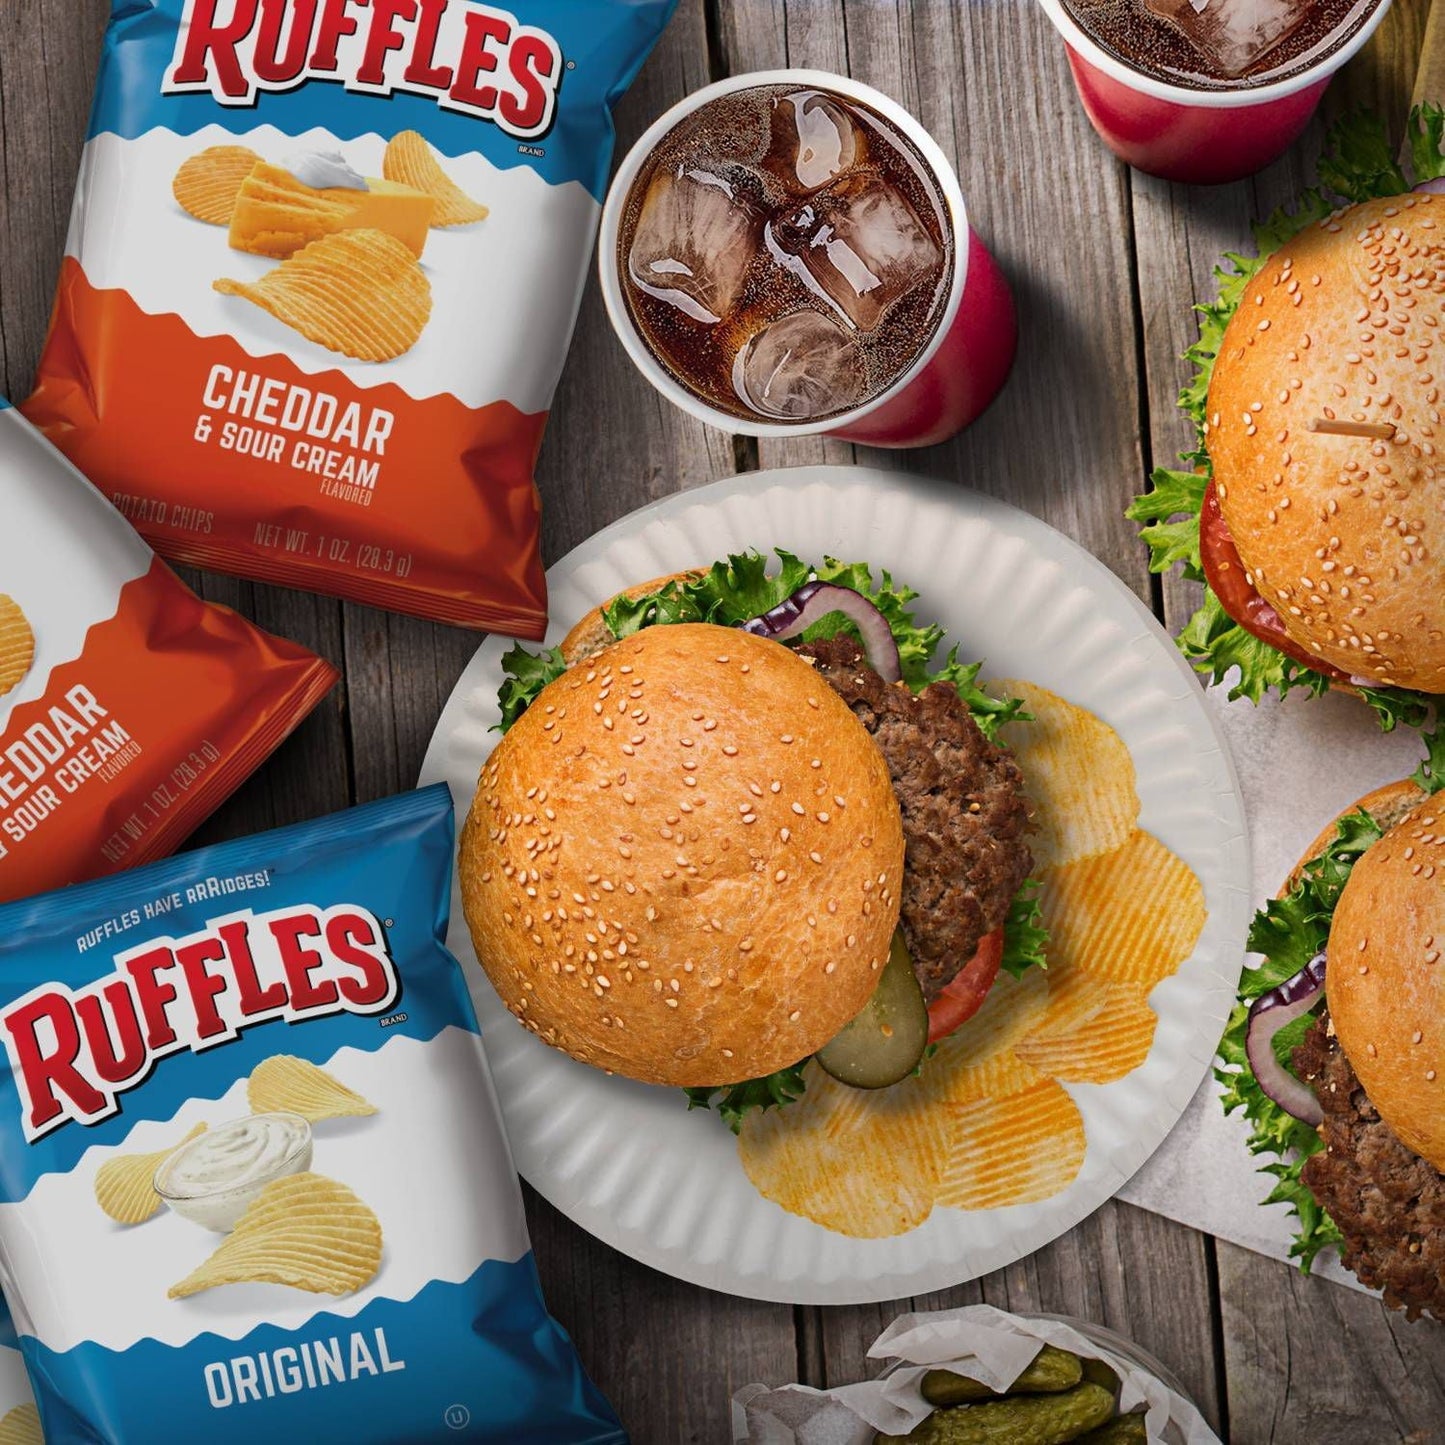 Ruffles Original Potato Snack Chips,Party Size, 13 oz Bag